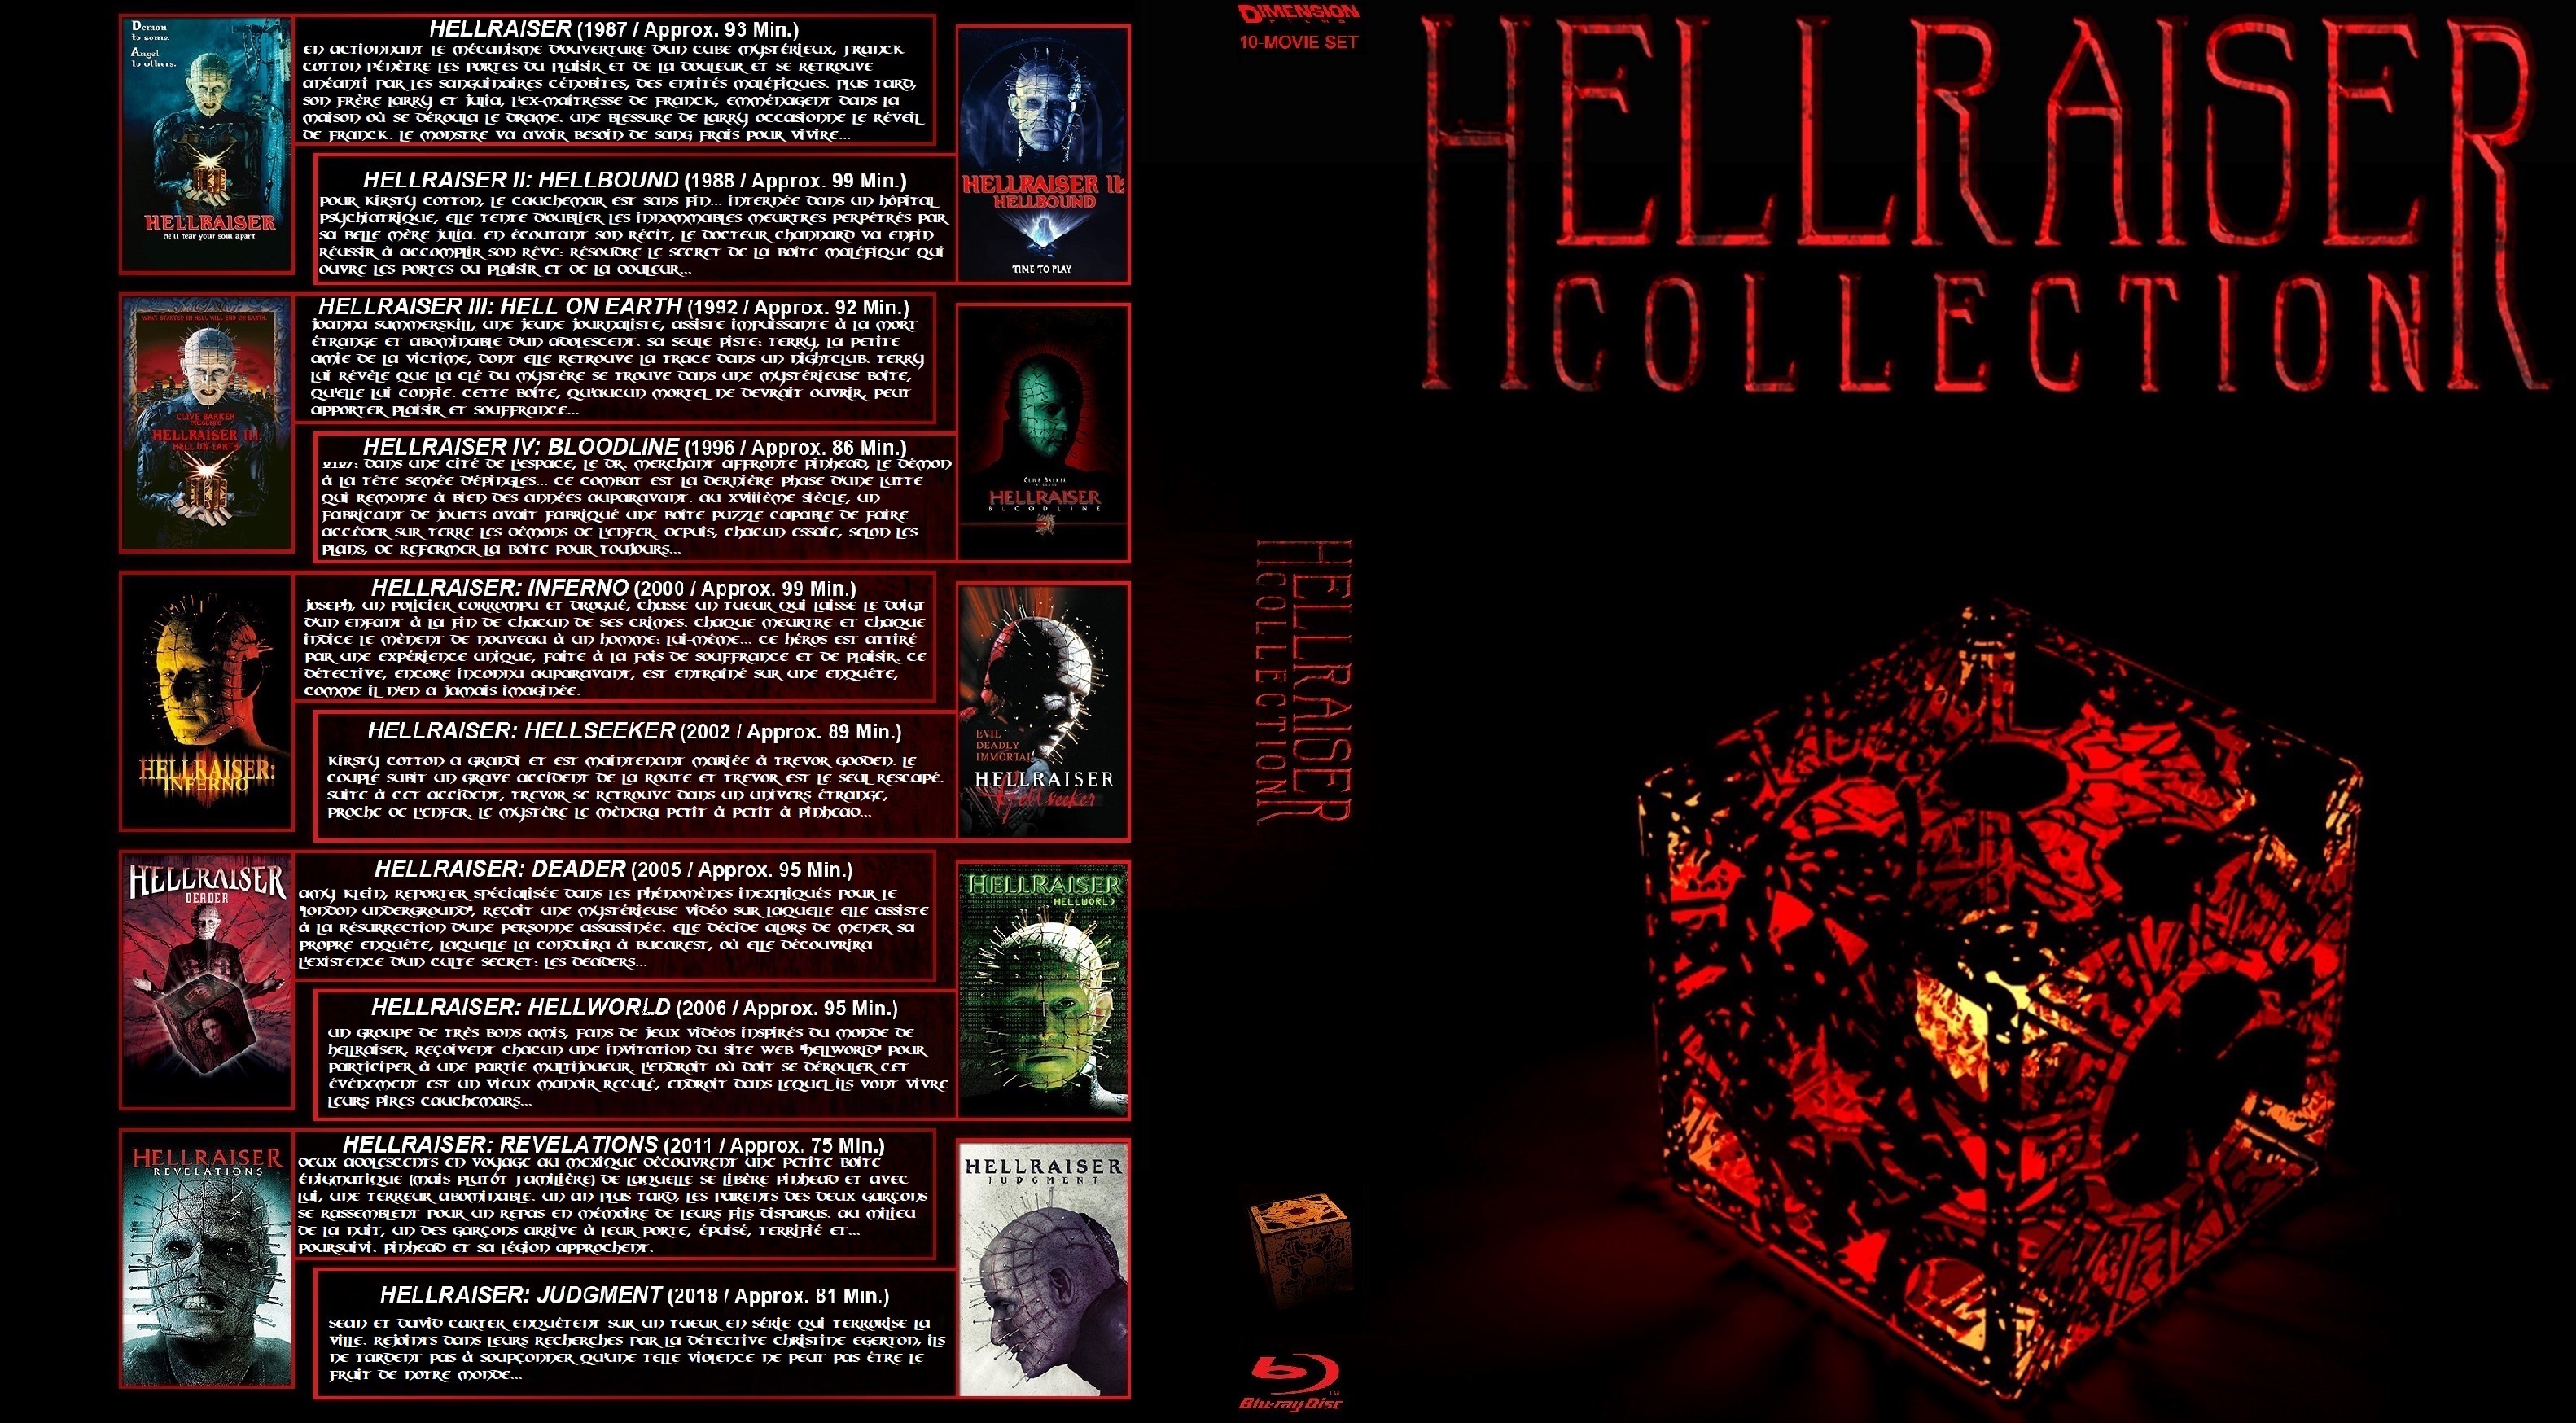 Jaquette DVD Hellraiser Collection custom (BLU-RAY)